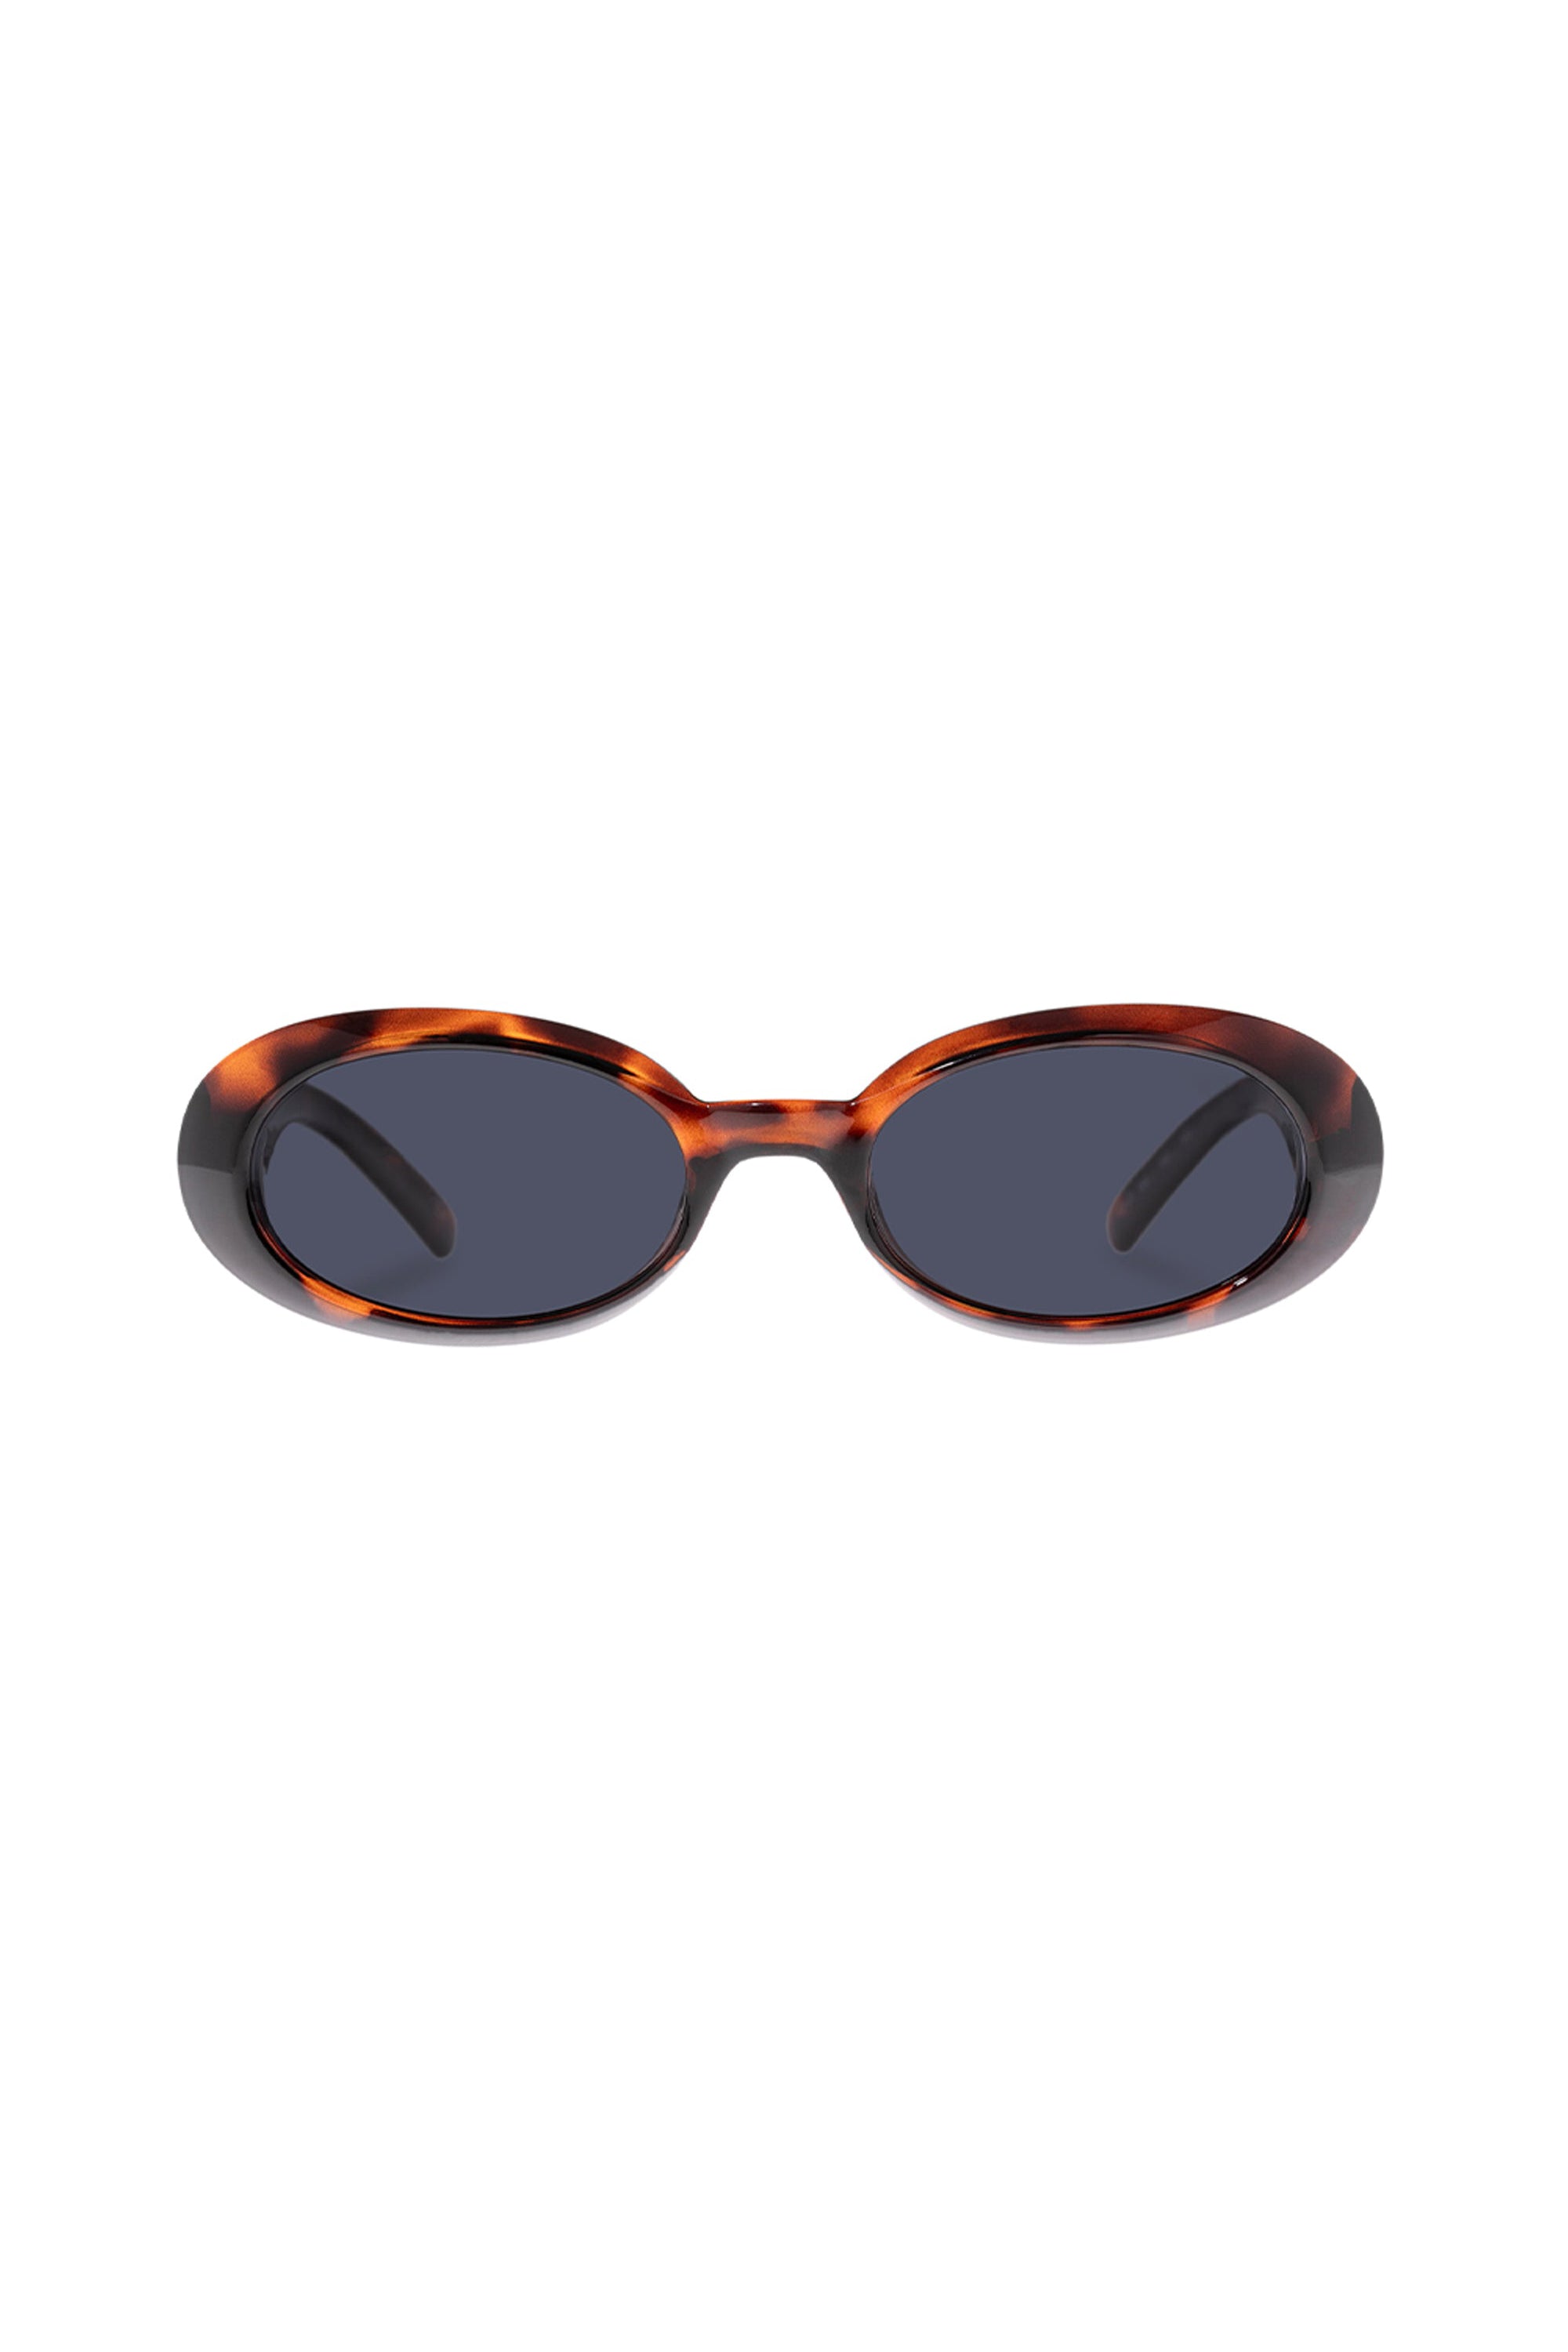 Le Specs Work It! Sunglasses - Dark Tort *Polarized* - RUM Amsterdam